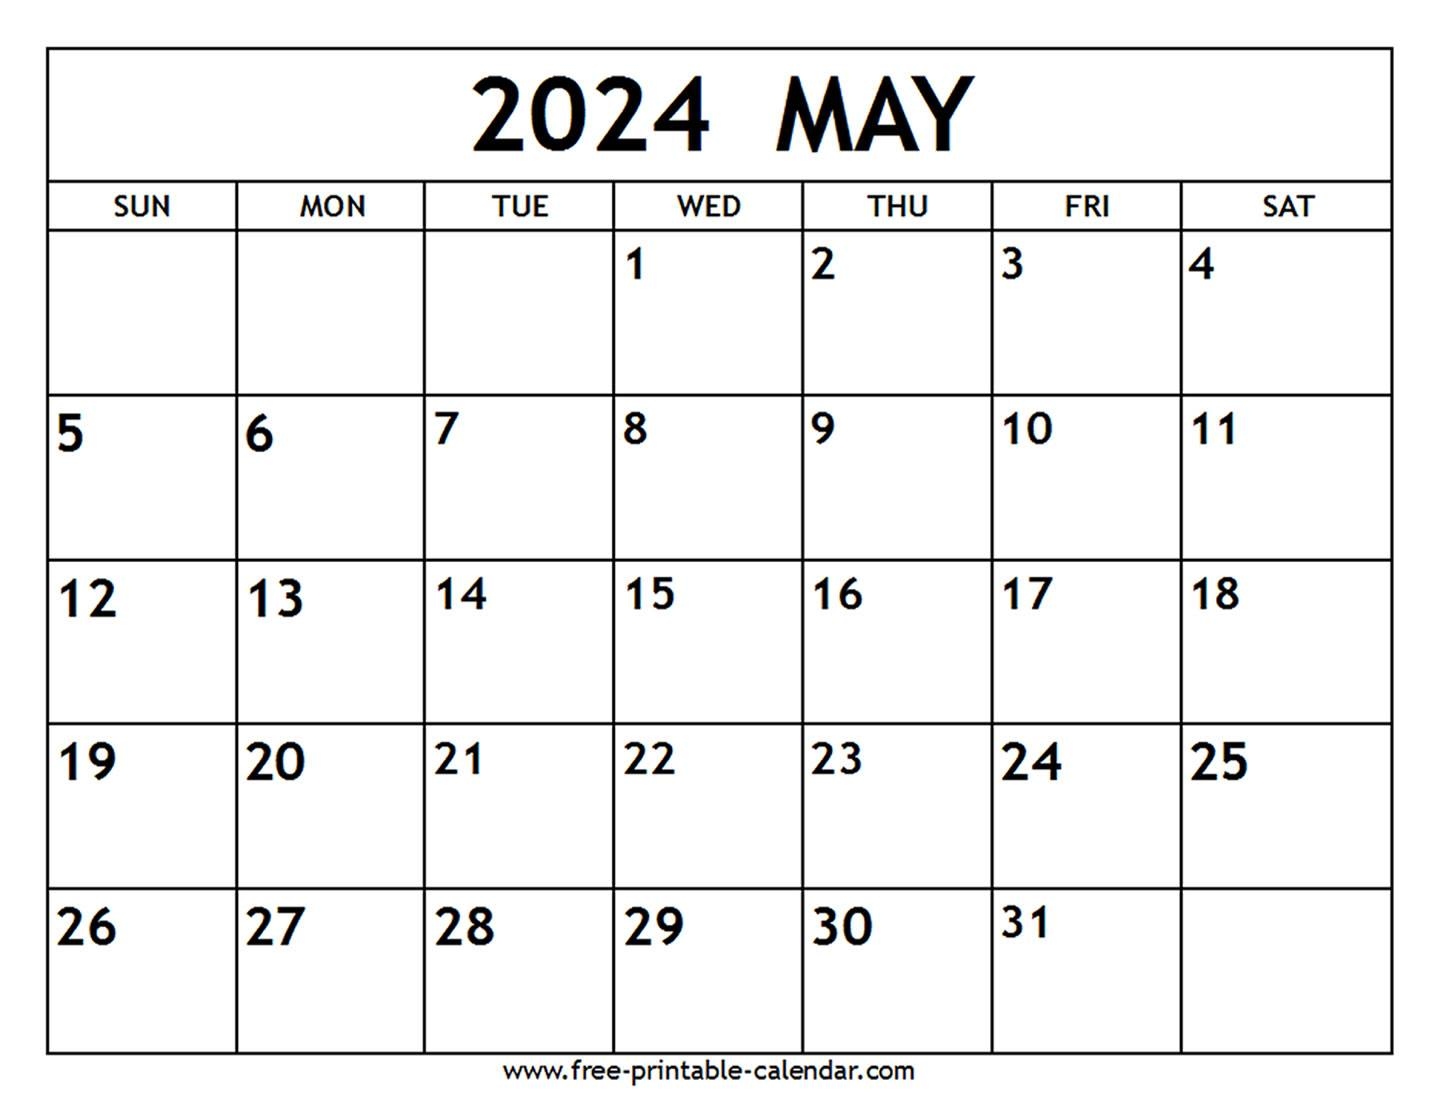 May 2024 Calendar - Free-Printable-Calendar within Free Printable Calendar 2024 May June July August